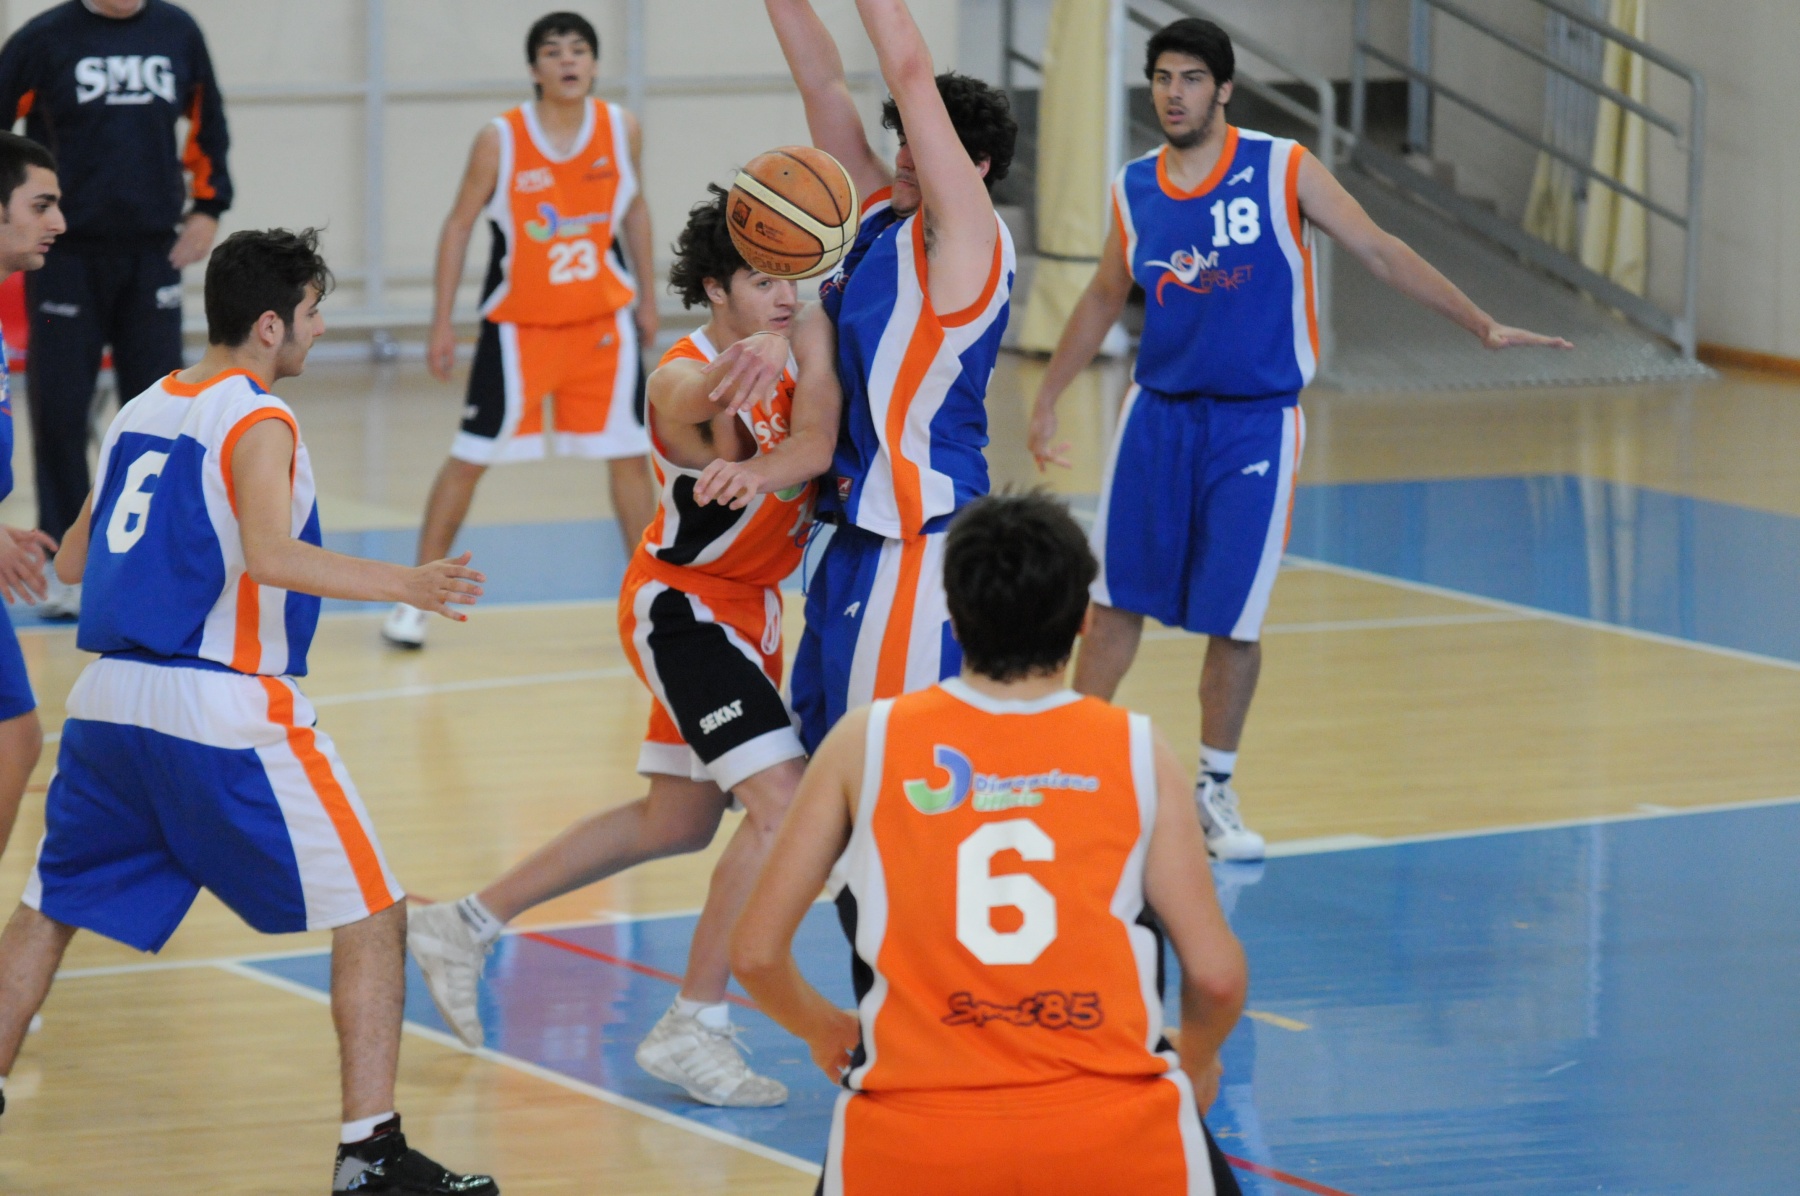 2010-05-23-SMG-Vivibasket-Napoli-443